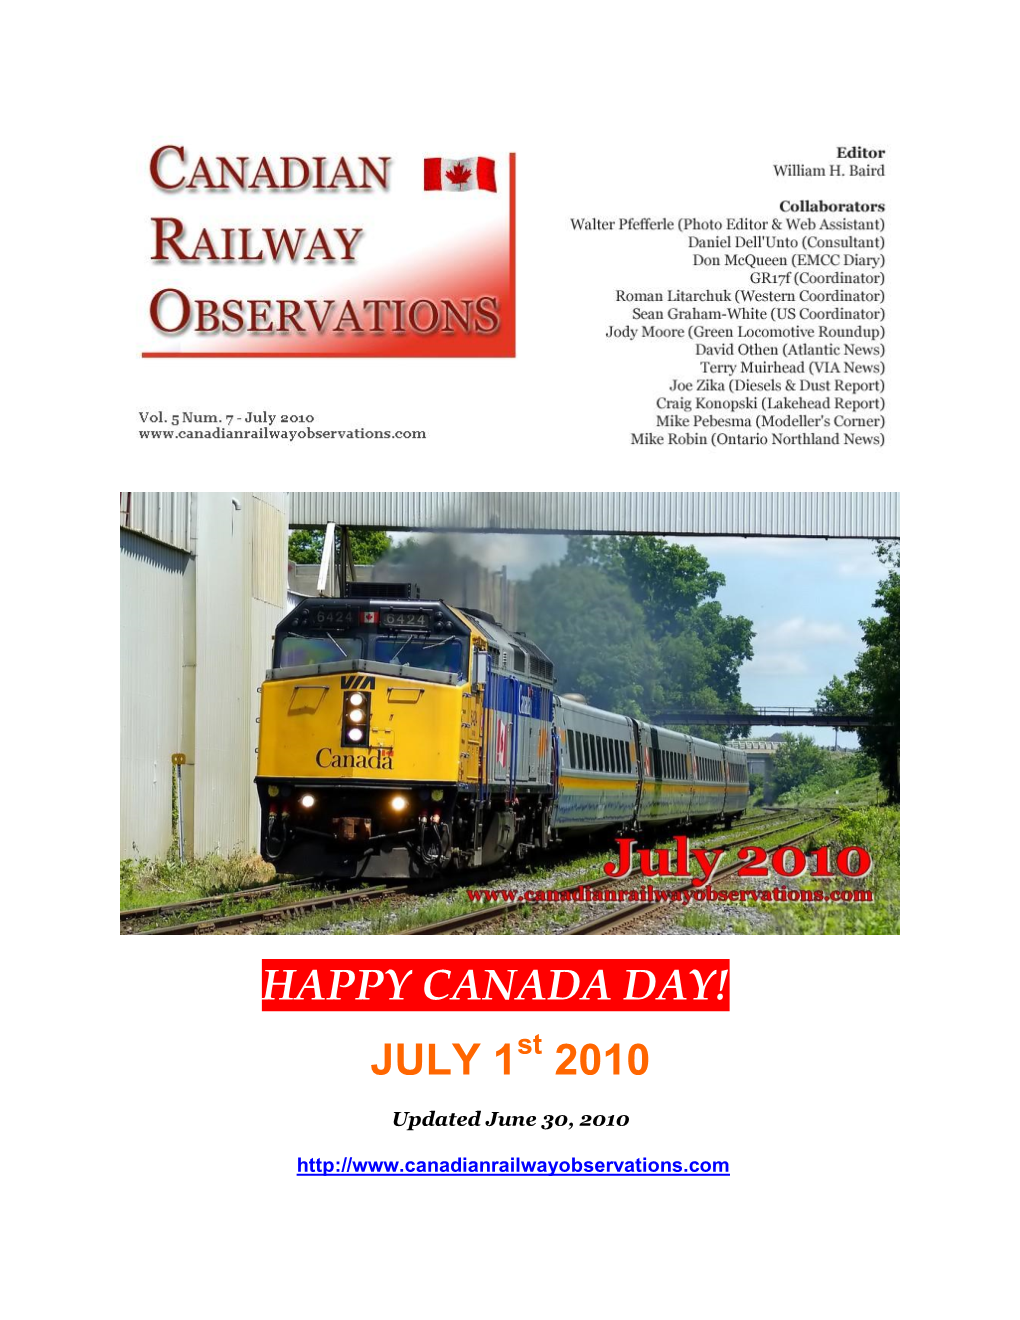 Happy Canada Day! July 1 2010